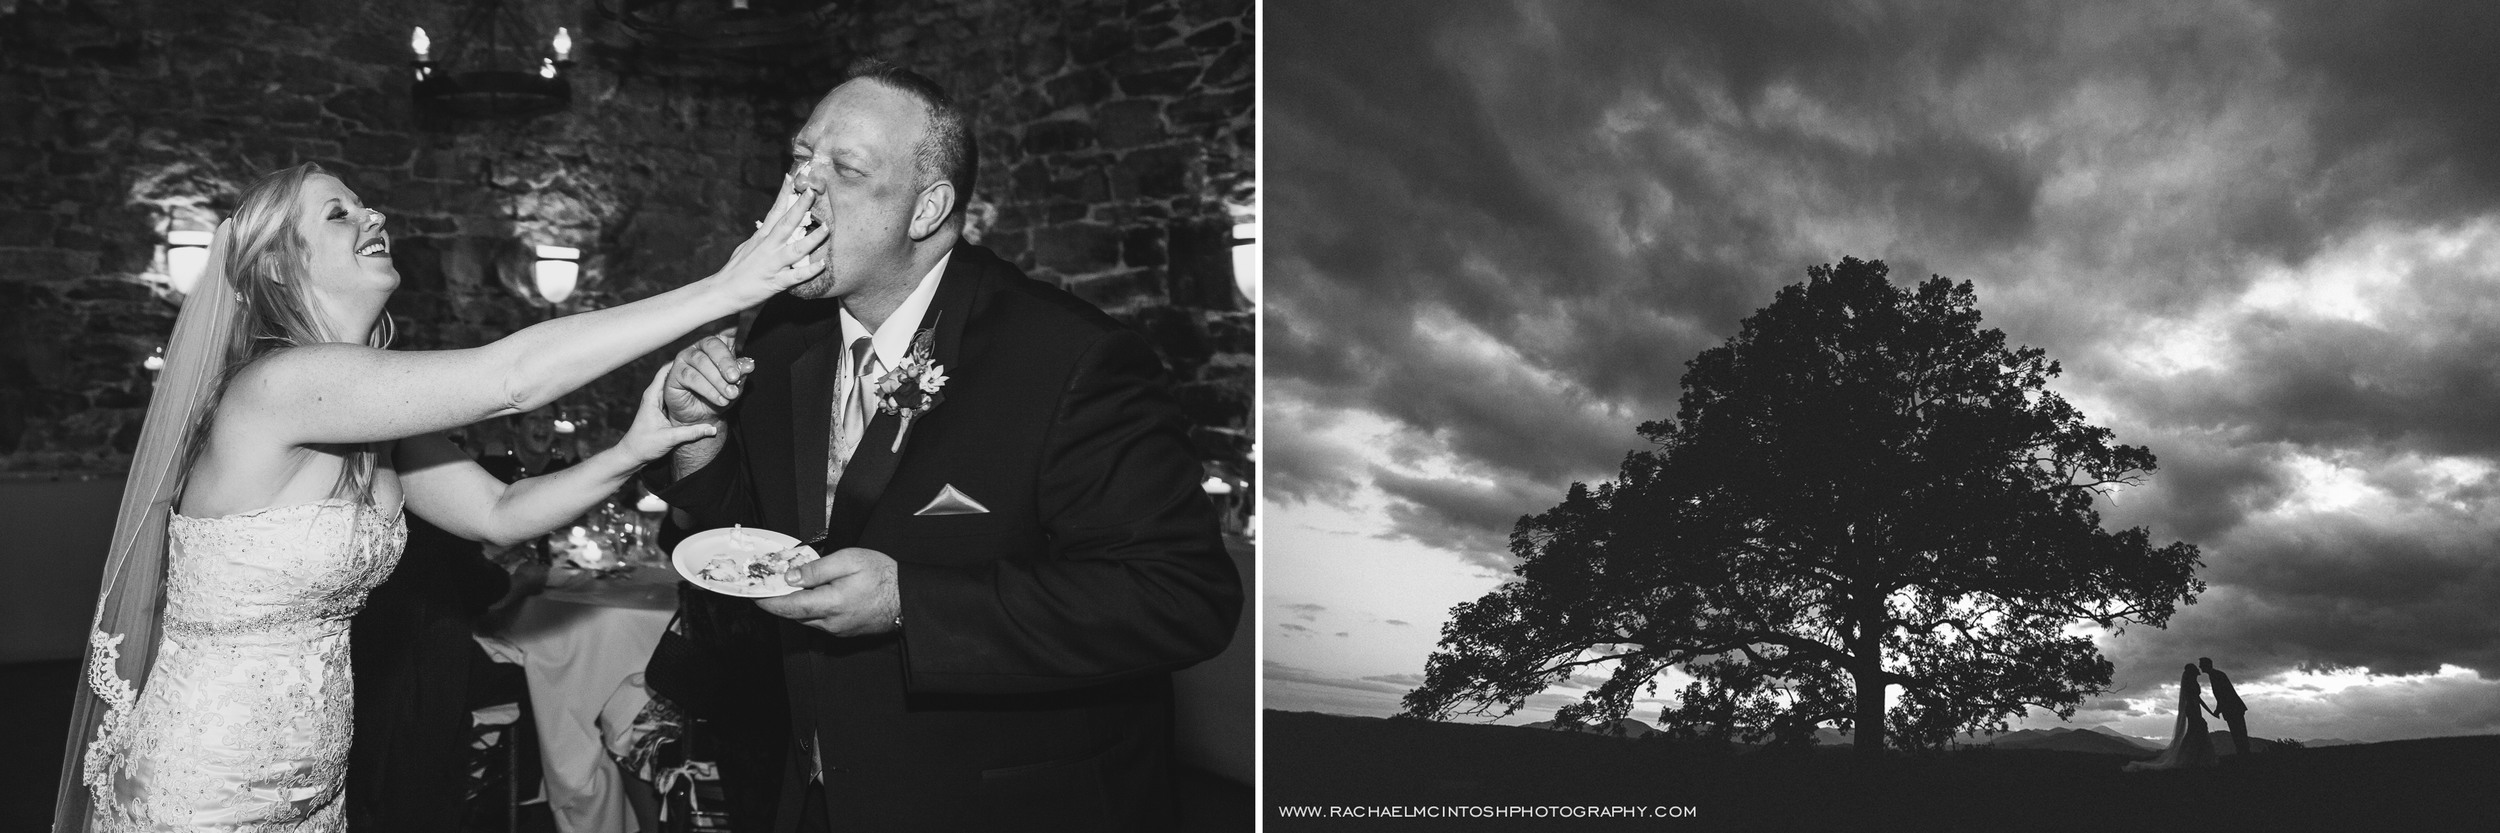 Asheville Wedding Photographer 2014 in Review-67.jpg